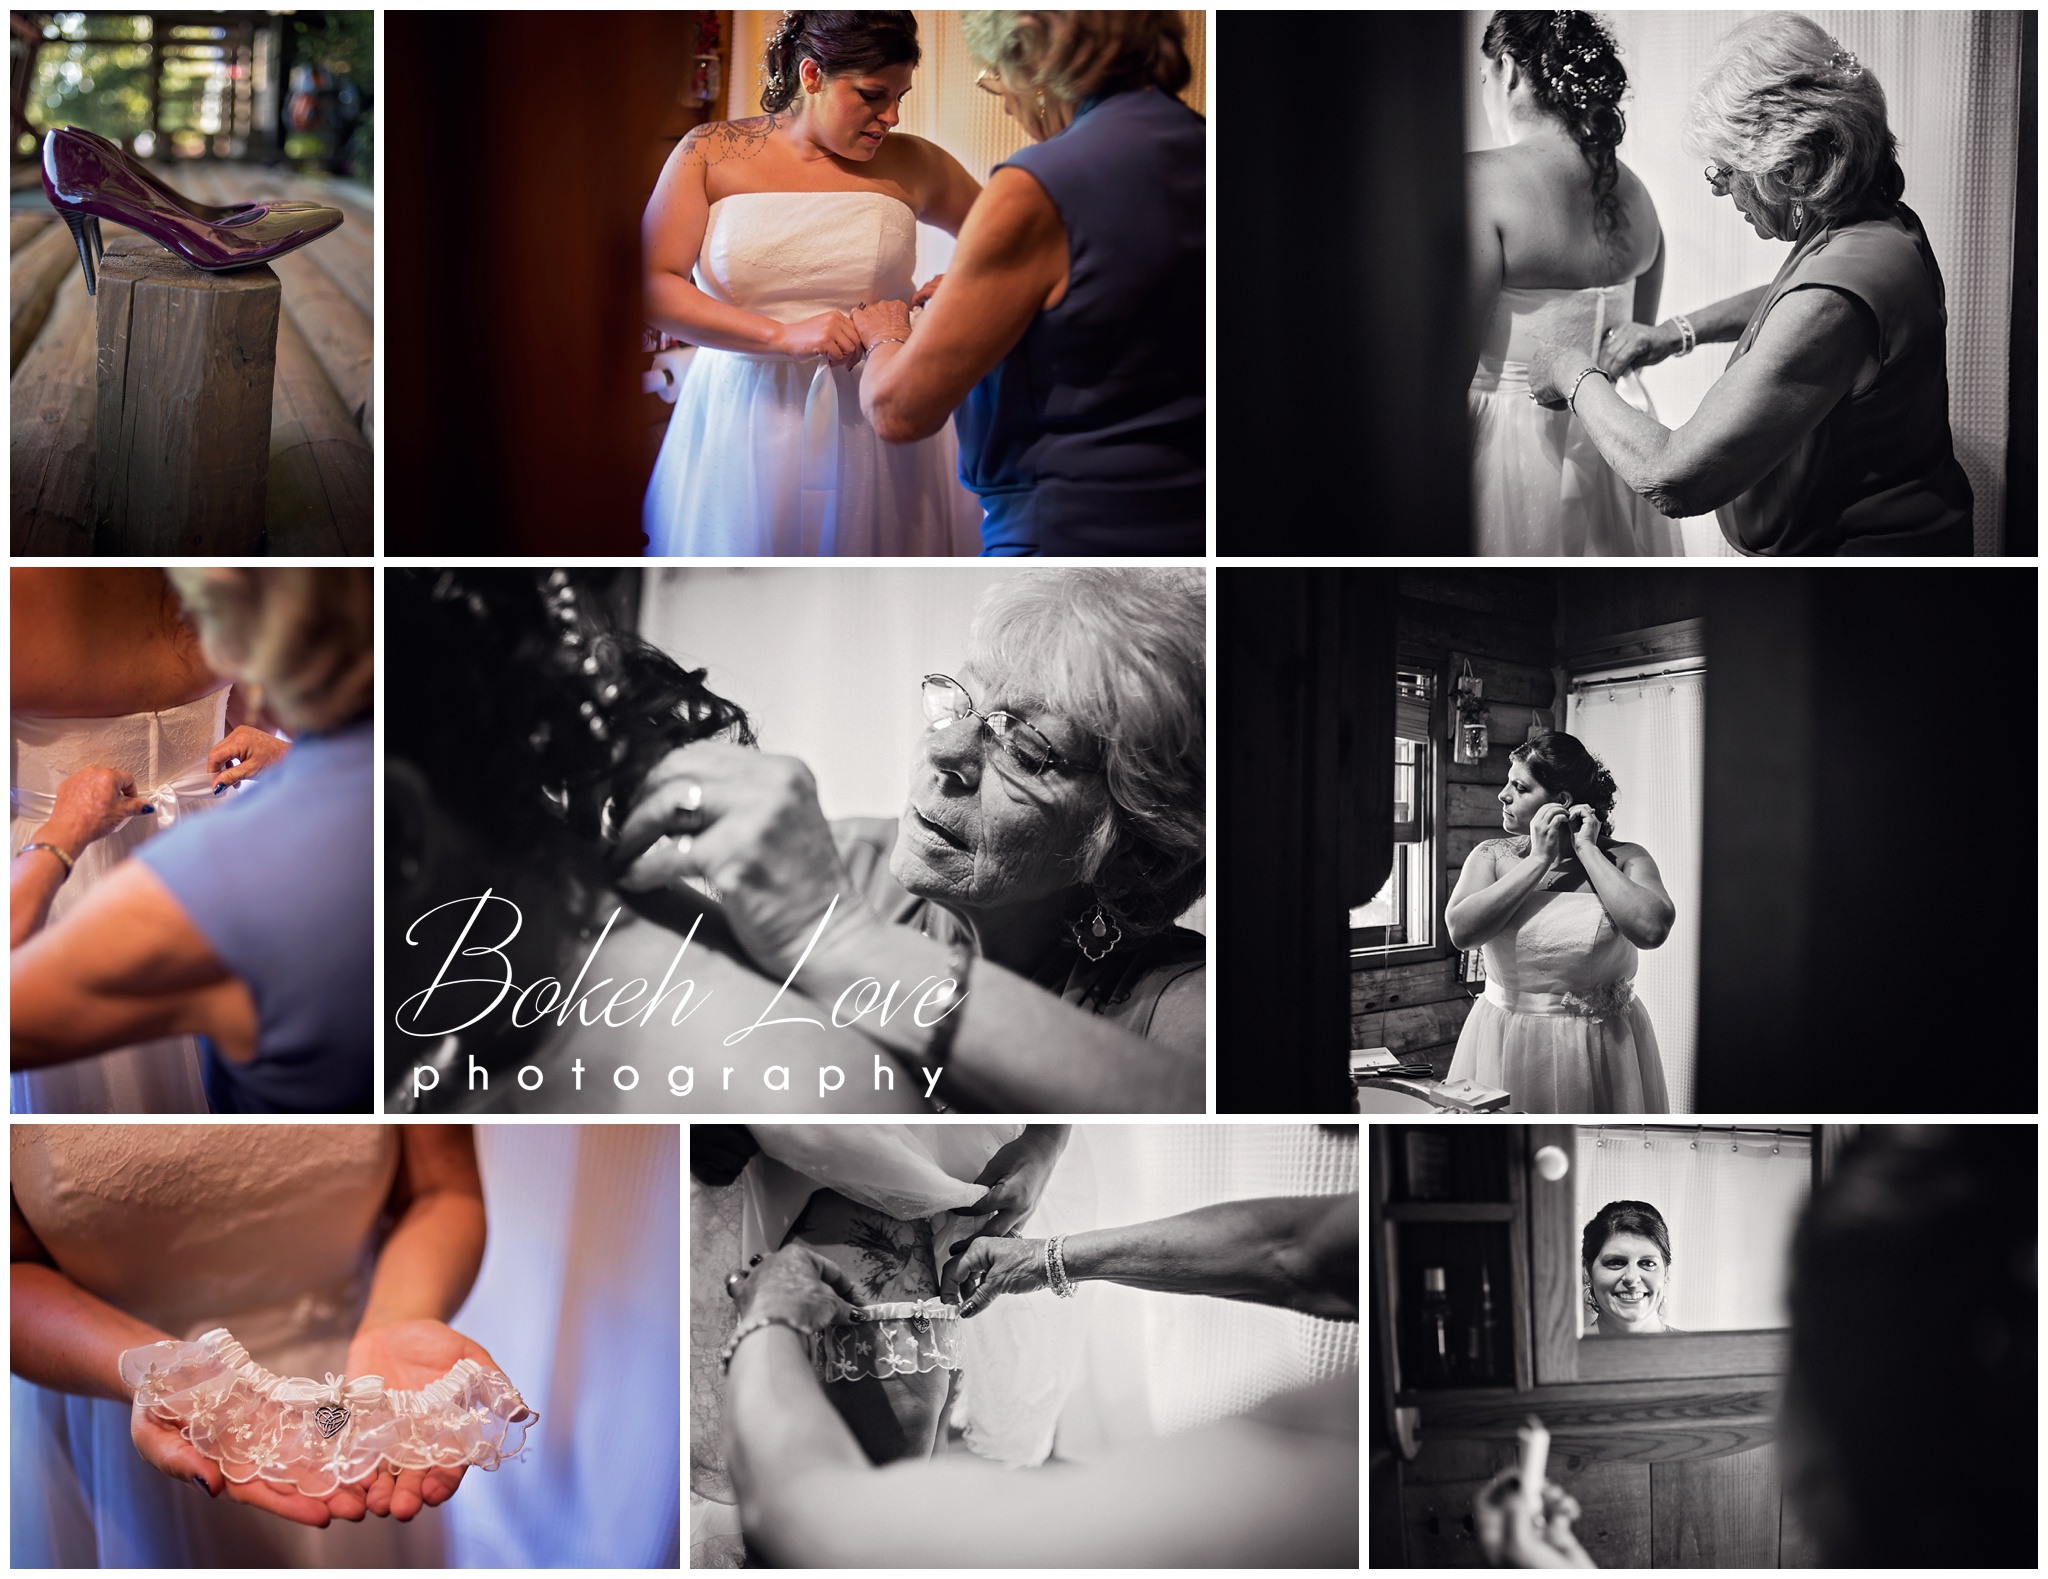 Bokeh Love Photography, Intimate wedding in Malaga NJ, South Jersey wedding photographer, new jersey wedding photographer